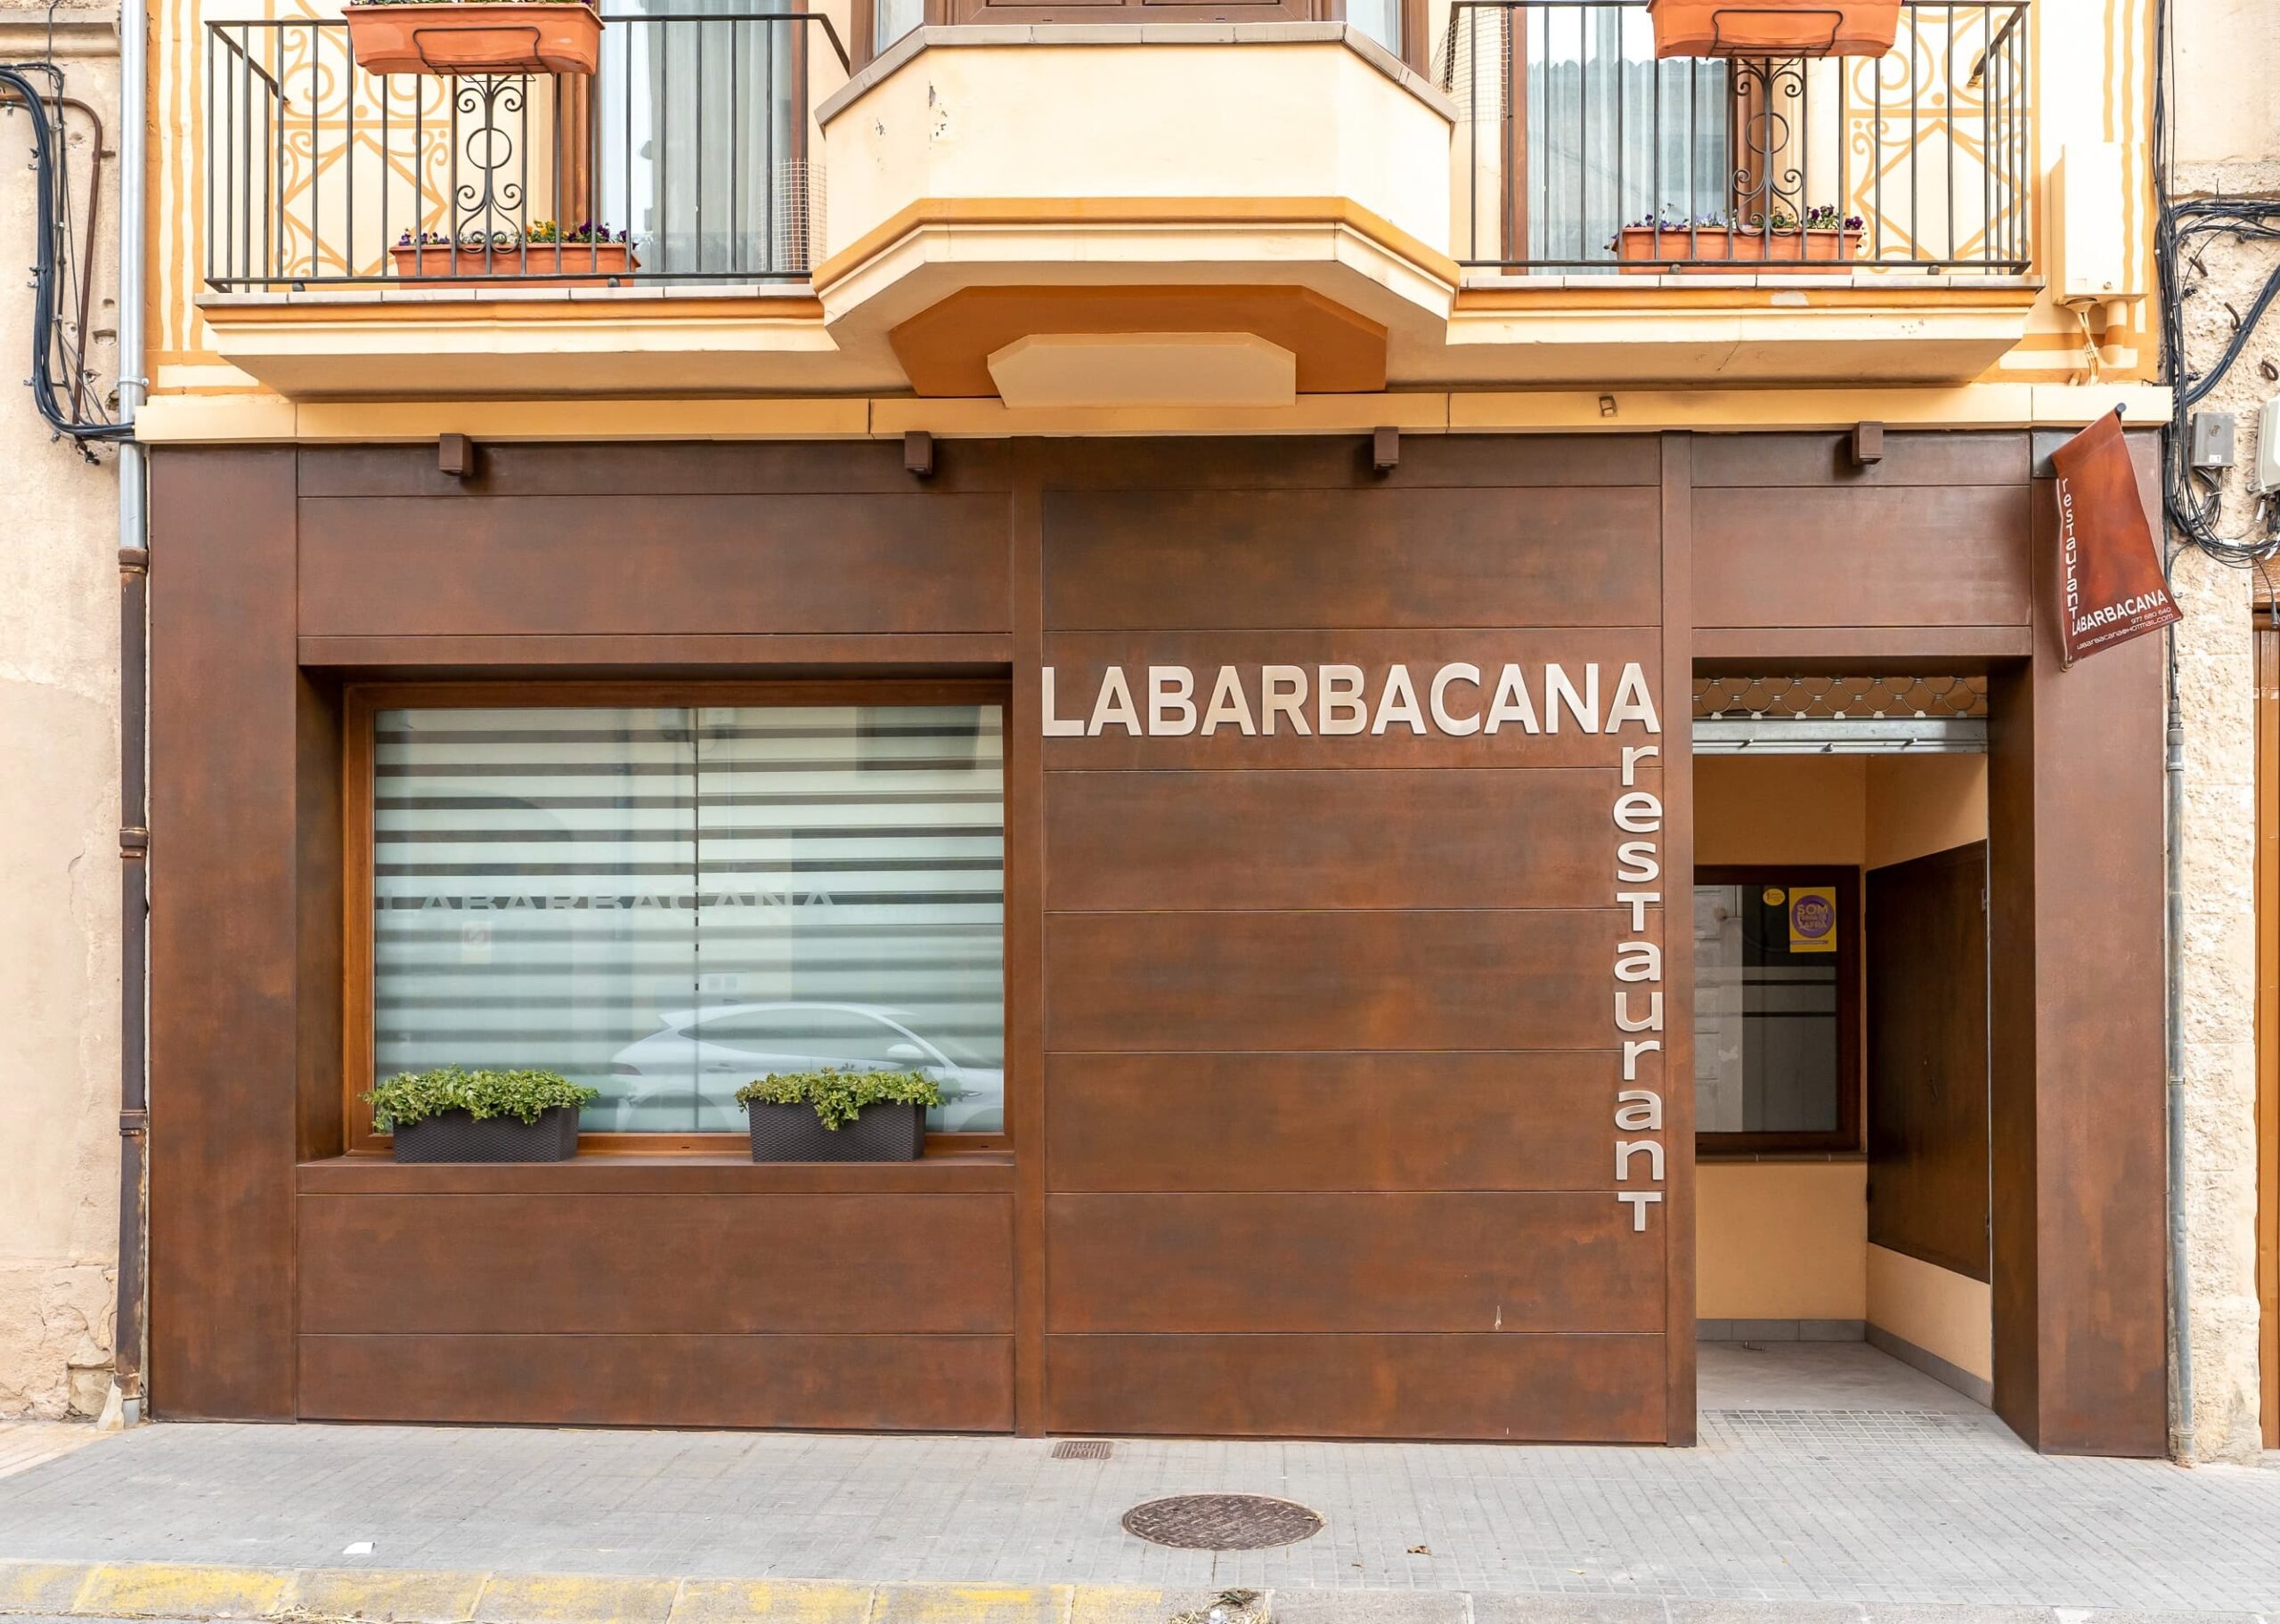 Inversión Inmobiliaria en Santa Coloma de Queralt: Edificio Exclusivo con Restaurante